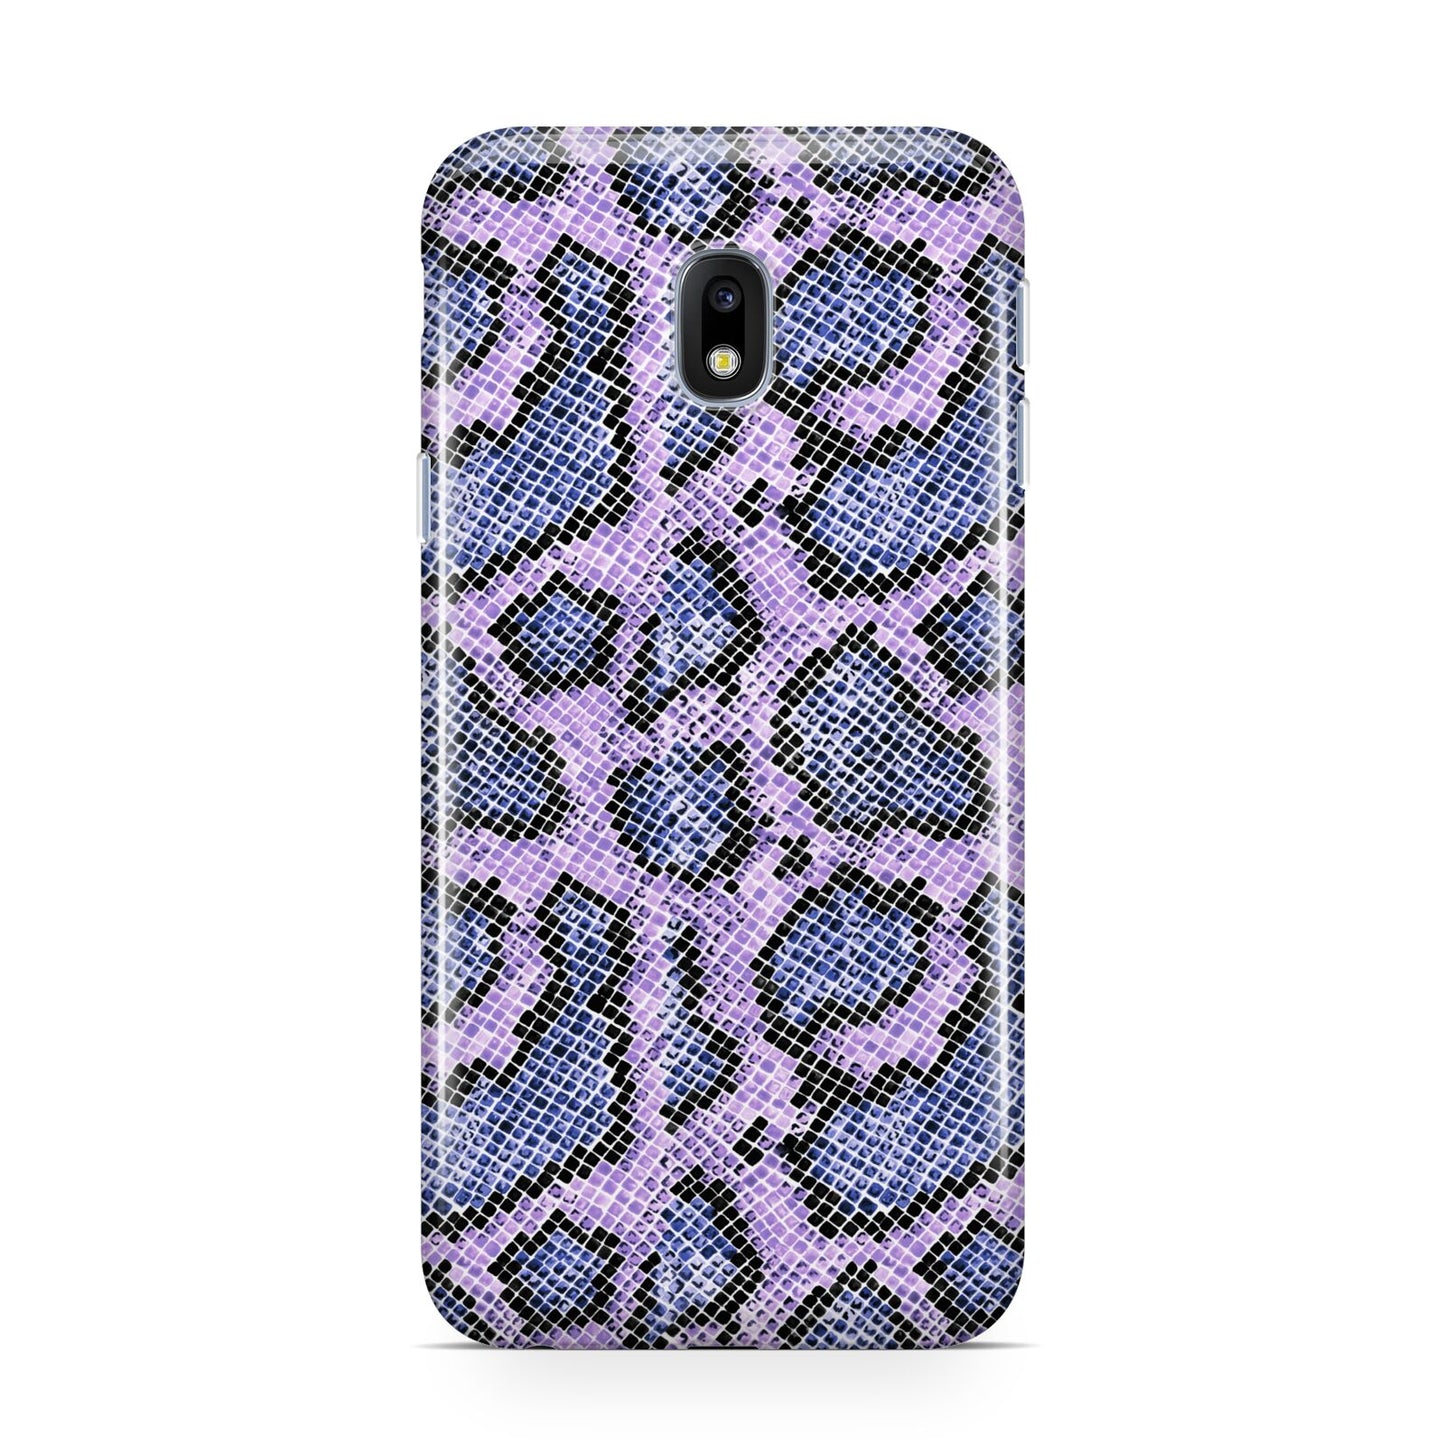 Purple And Blue Snakeskin Samsung Galaxy J3 2017 Case